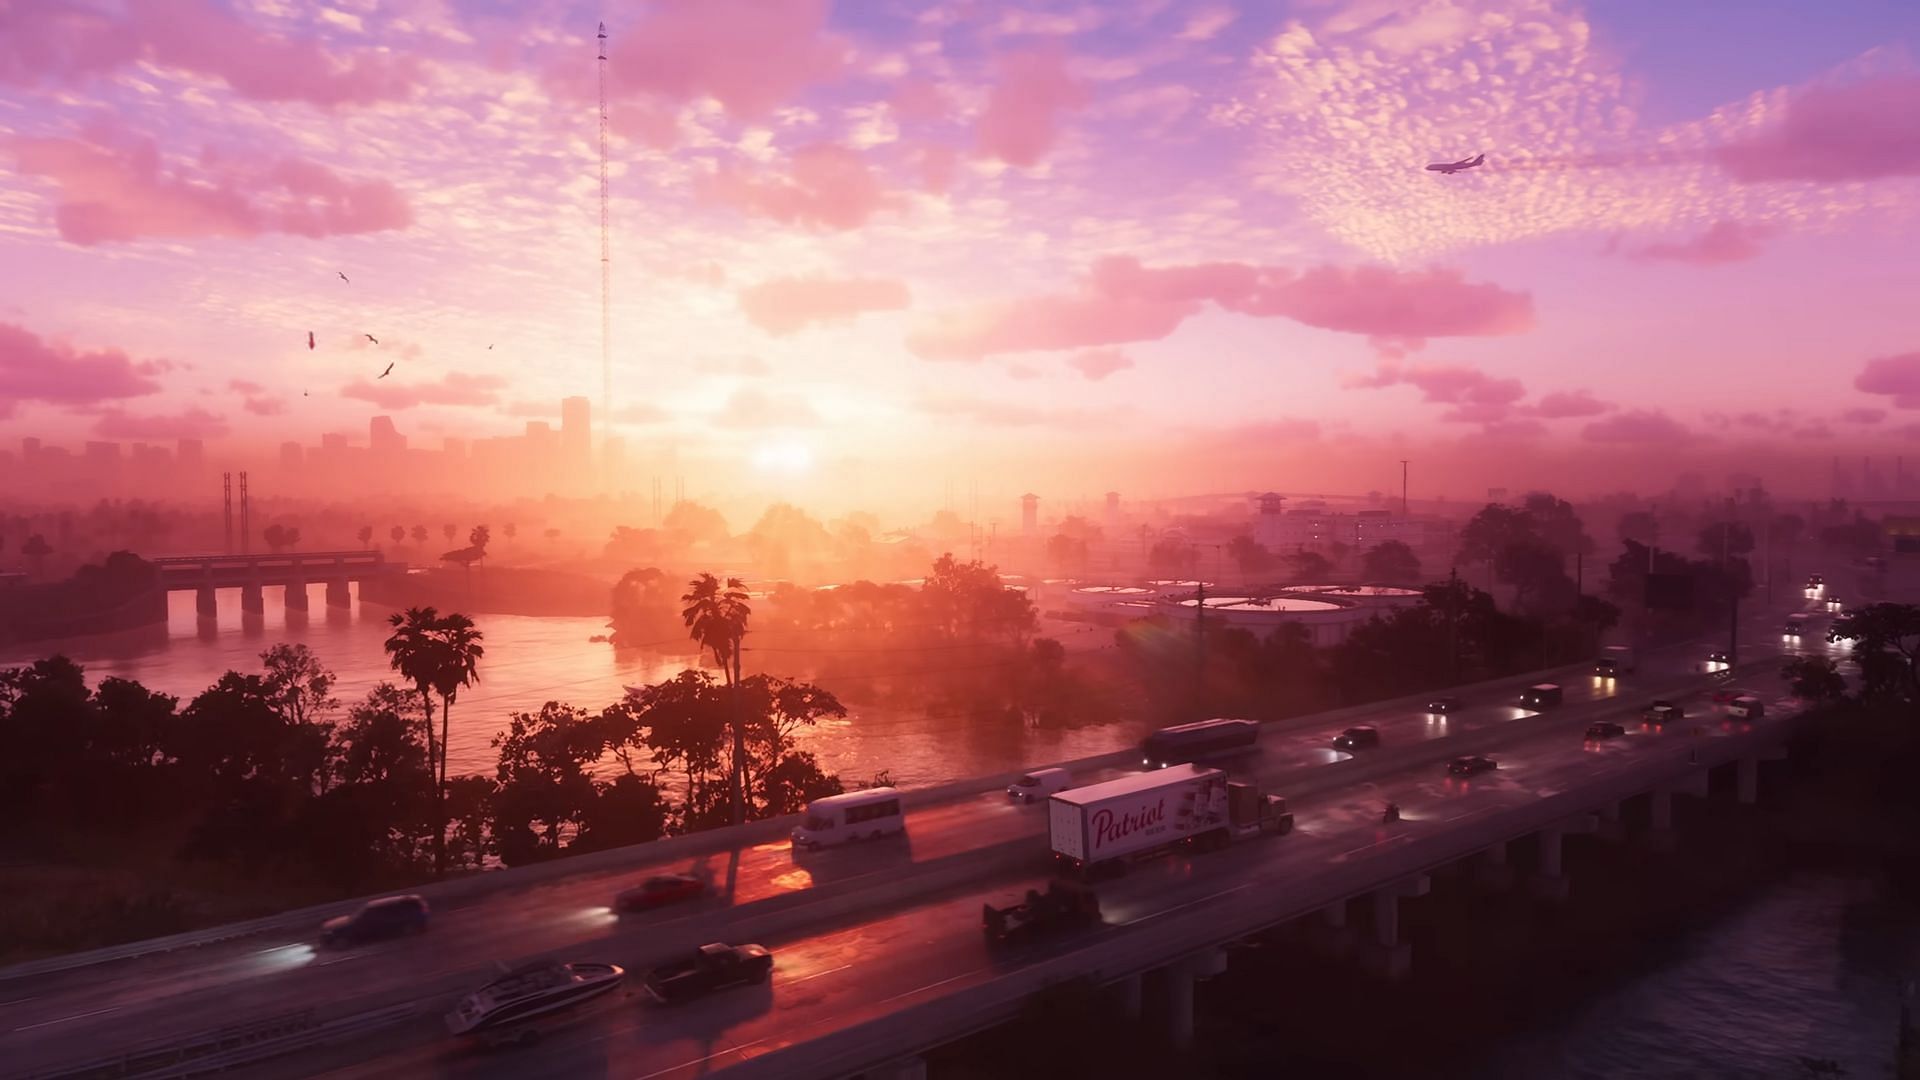 The sun rises over Leonida (Image via Rockstar Games)